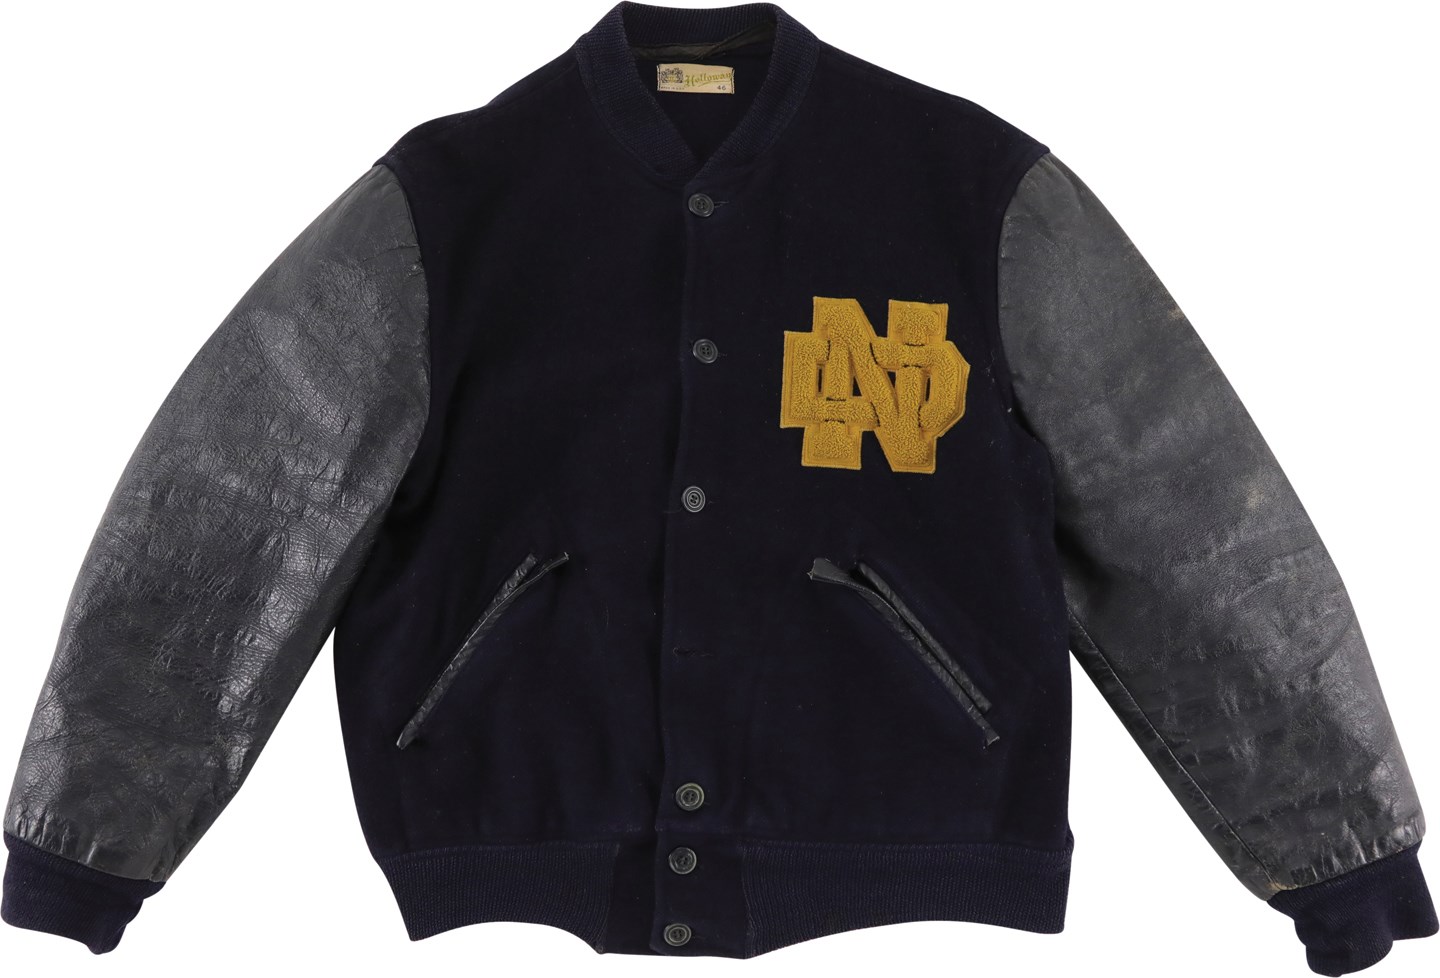 - Notre Dame Fighting Irish Football Letterman's Jacket Attributed to Rudy Ruettiger